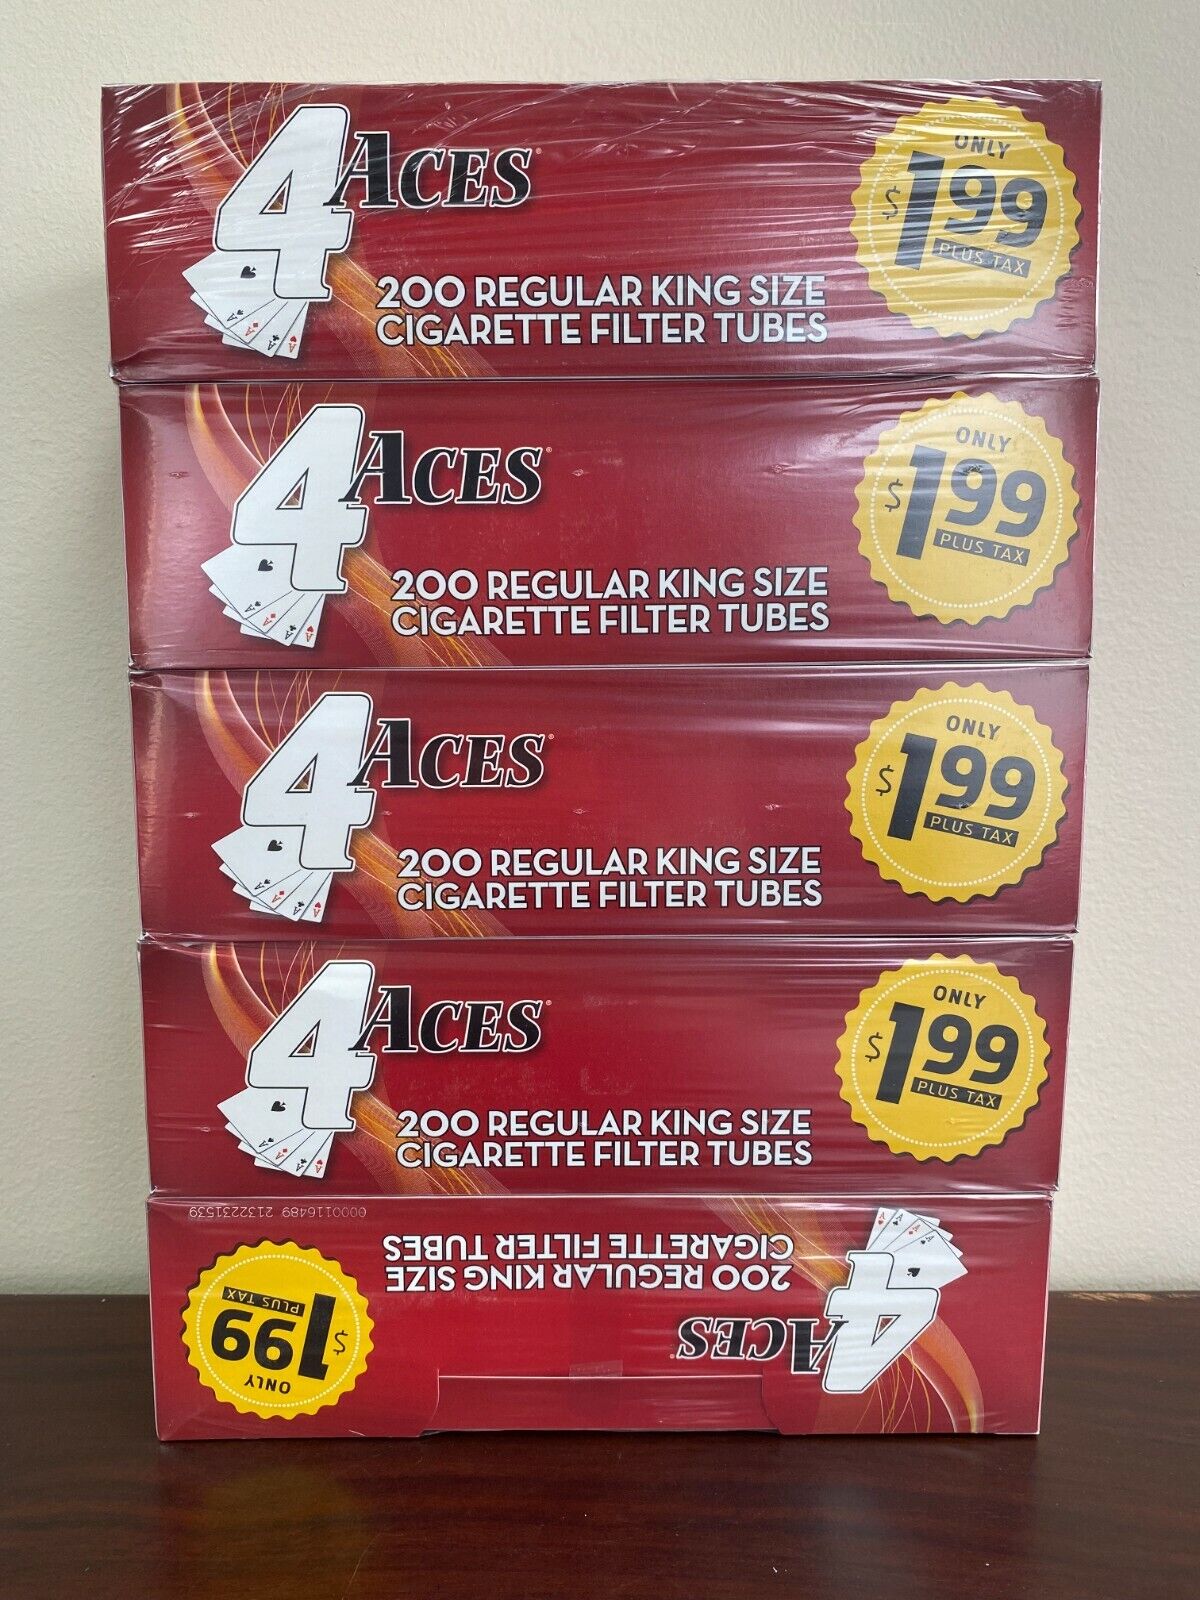 4 Aces Regular King Size RYO Cigarette Tubes 200ct Box (5 Boxes)